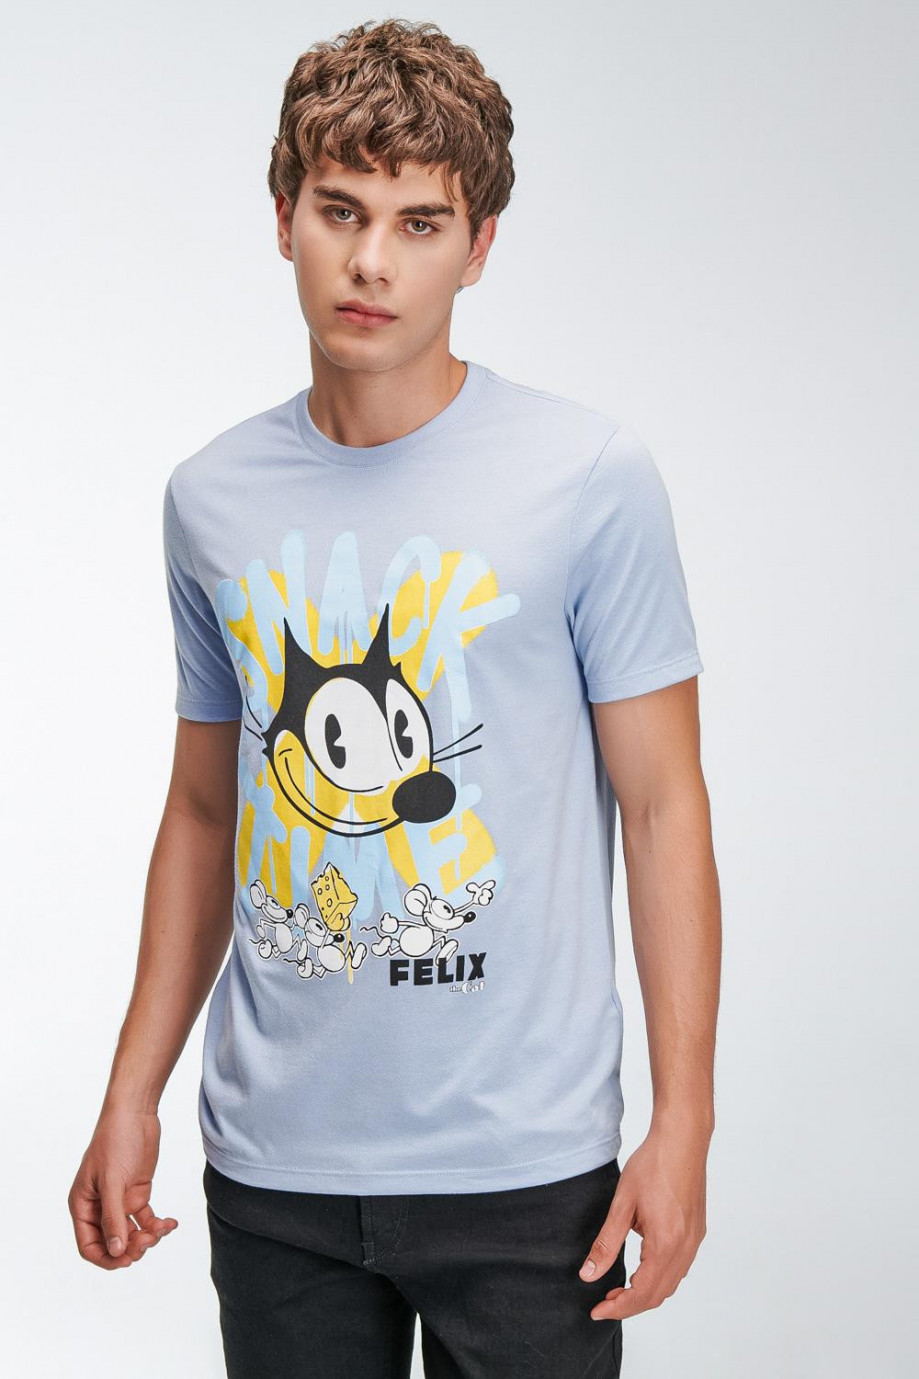 Camiseta manga corta estampada de Felix el Gato